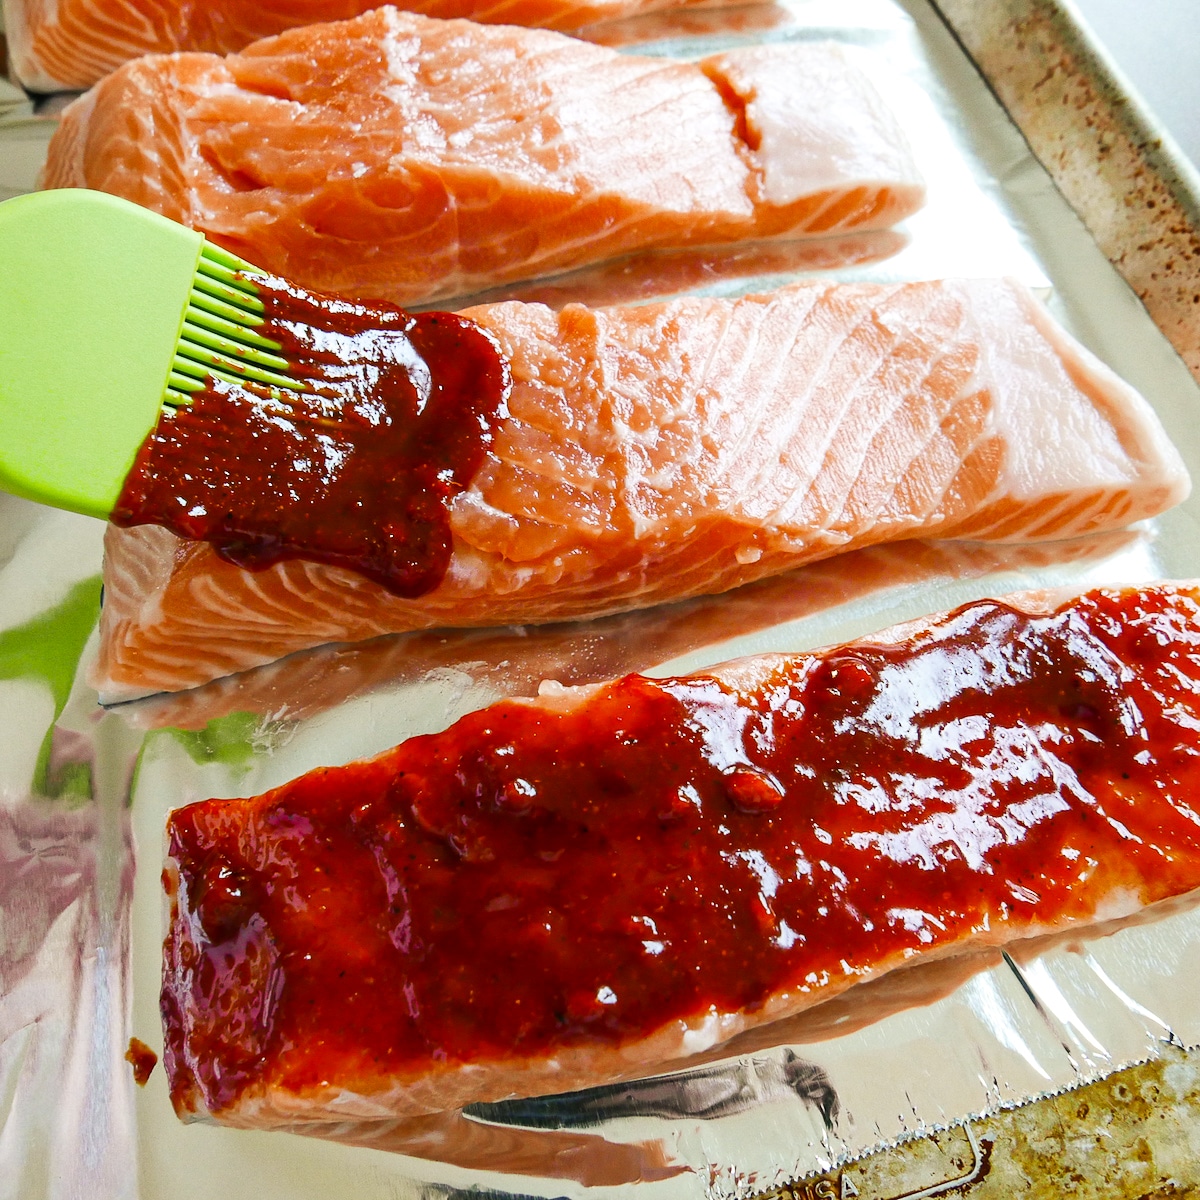 pastry brush spreading gochujang marinade onto salmon.